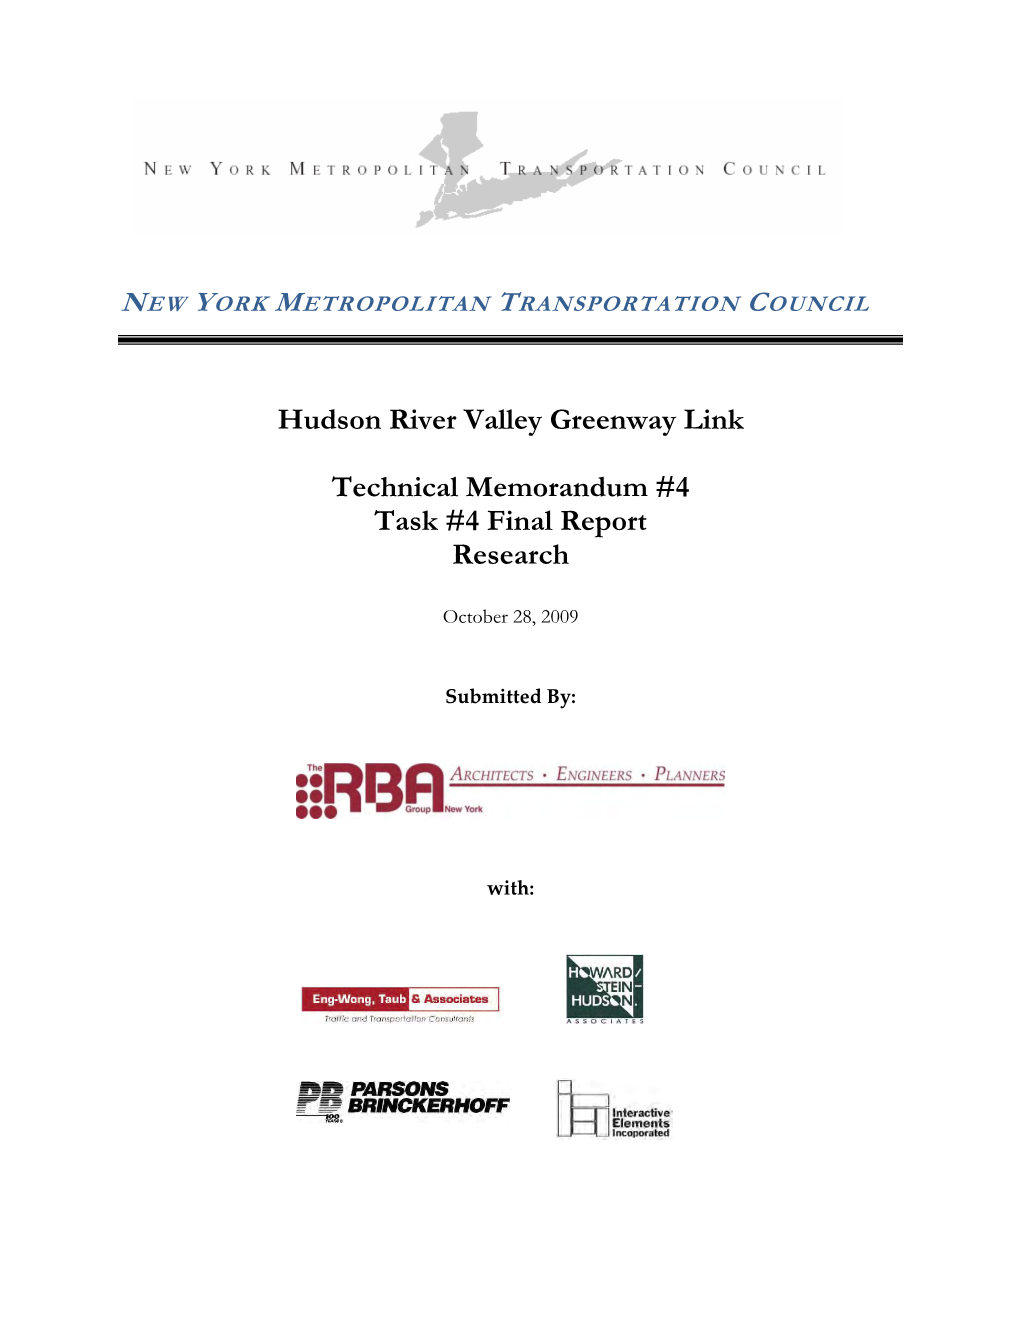 Hudson River Valley Greenway Link Technical Memorandum #4 Task #4 Final Report Research